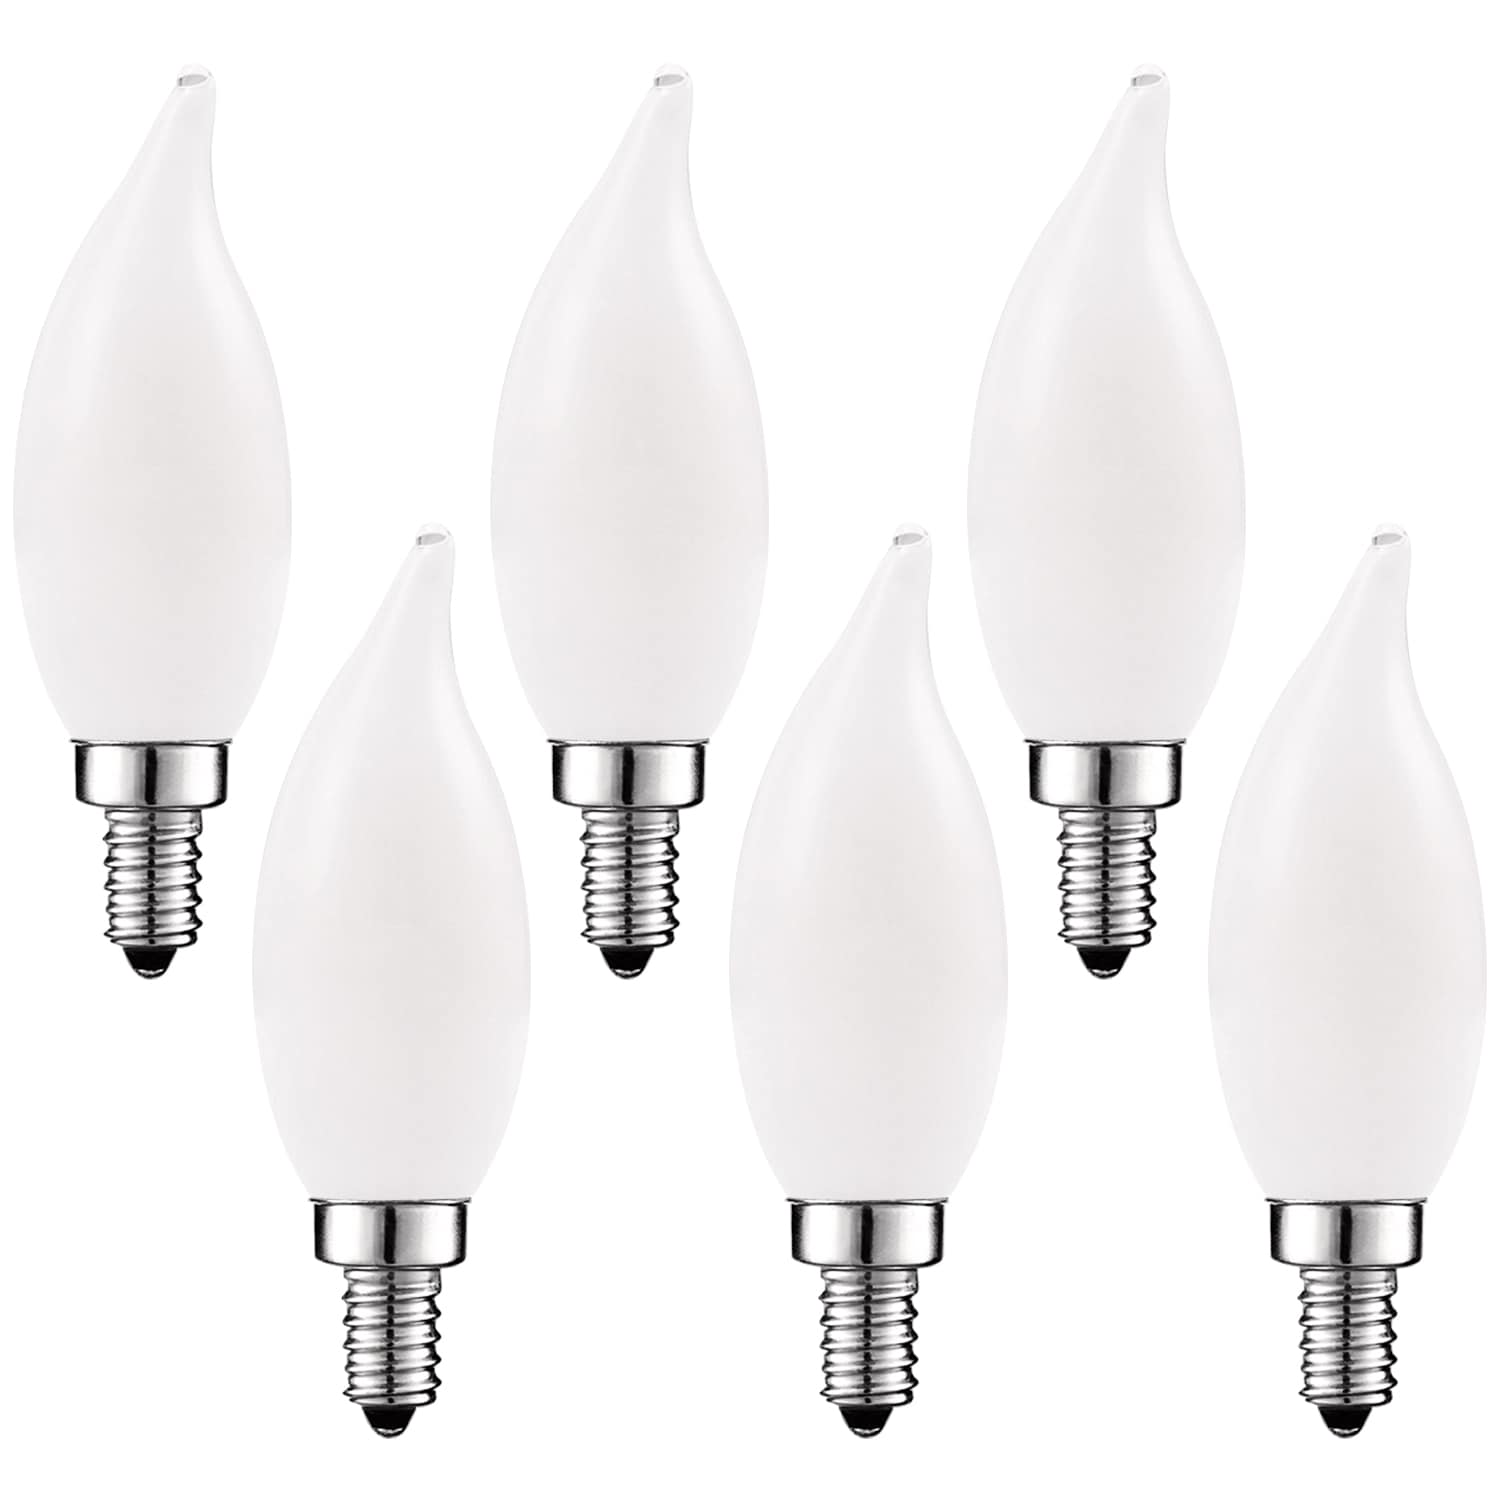 LED Pearl 6500K Daylight White SES E14 Candle Light Bulb Lamp =40W 2x 6W 